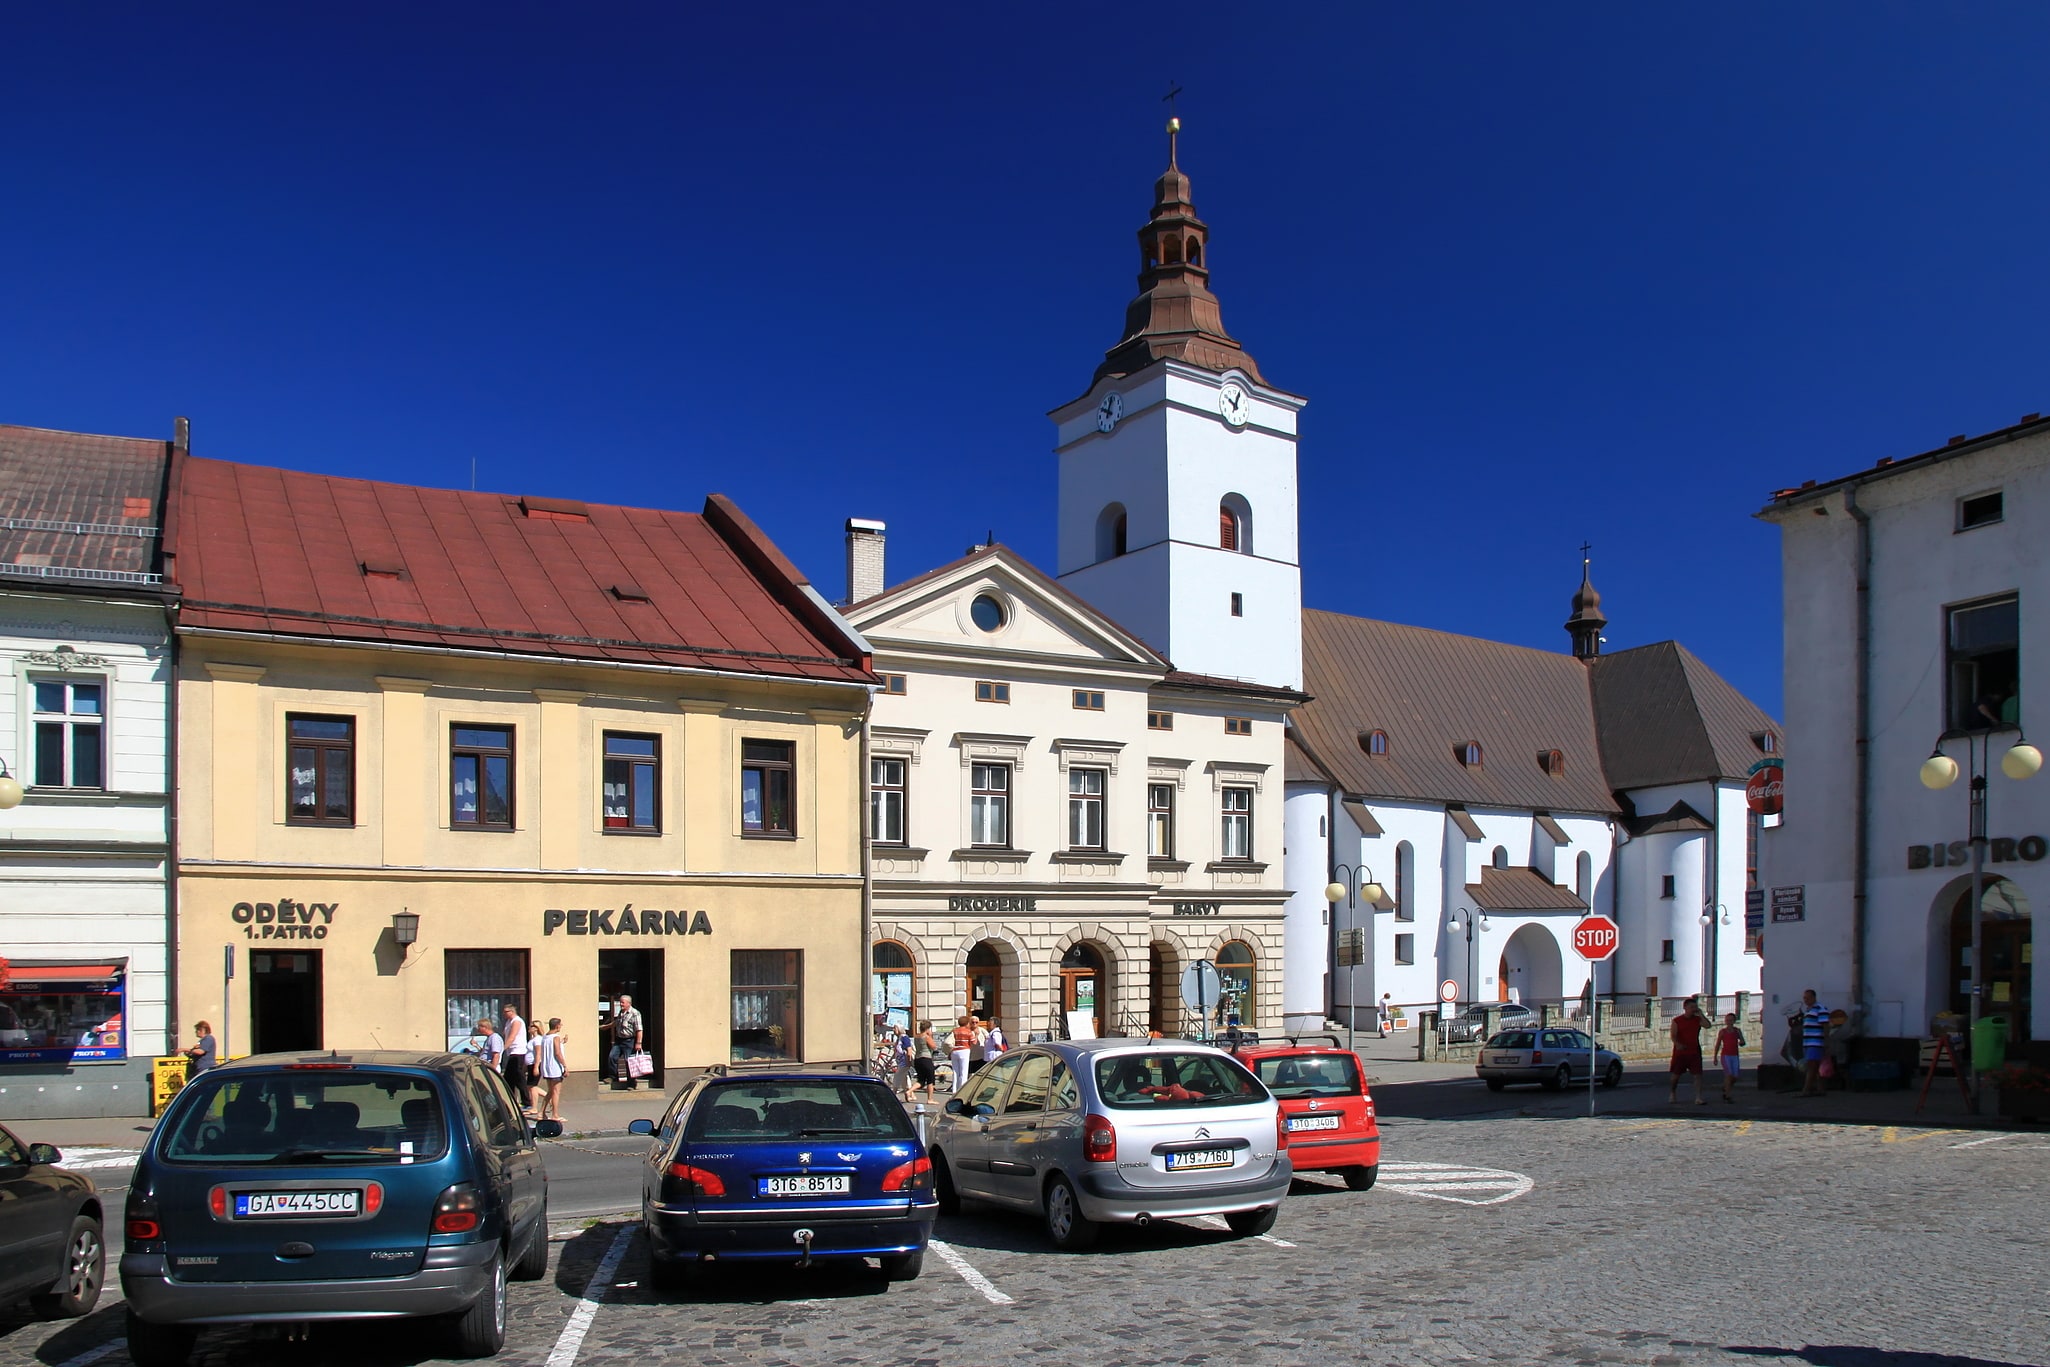 Jablunkov, Czech Republic